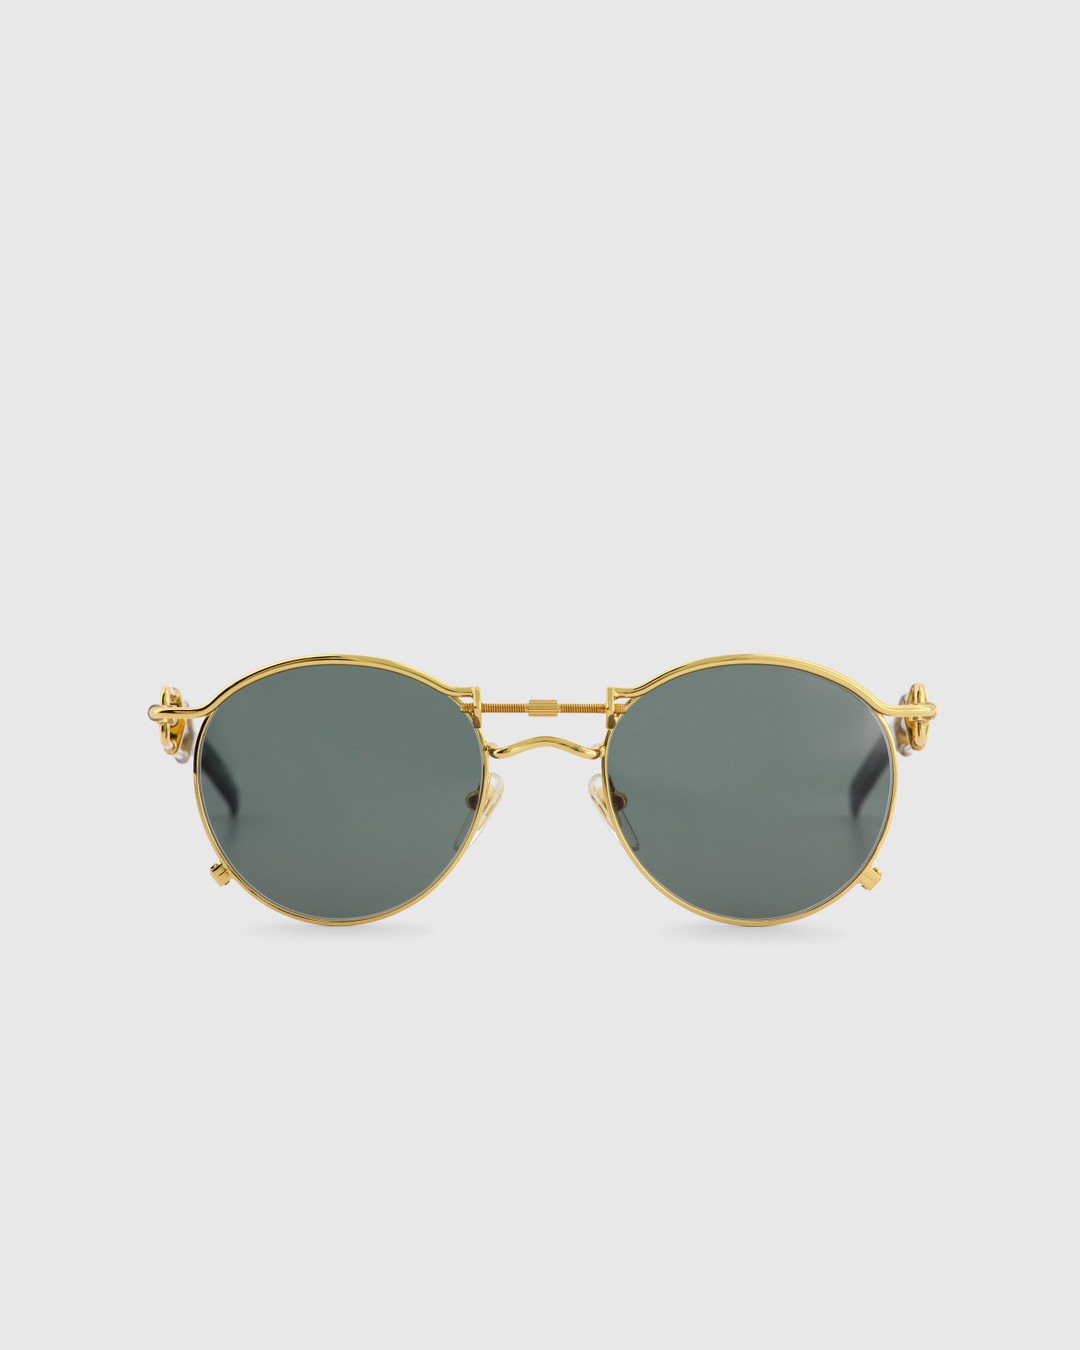 Jean Paul Gaultier x Burna Boy – 56-0174 Pas De Vis Sunglasses Yellow - Eyewear - Yellow - Image 1